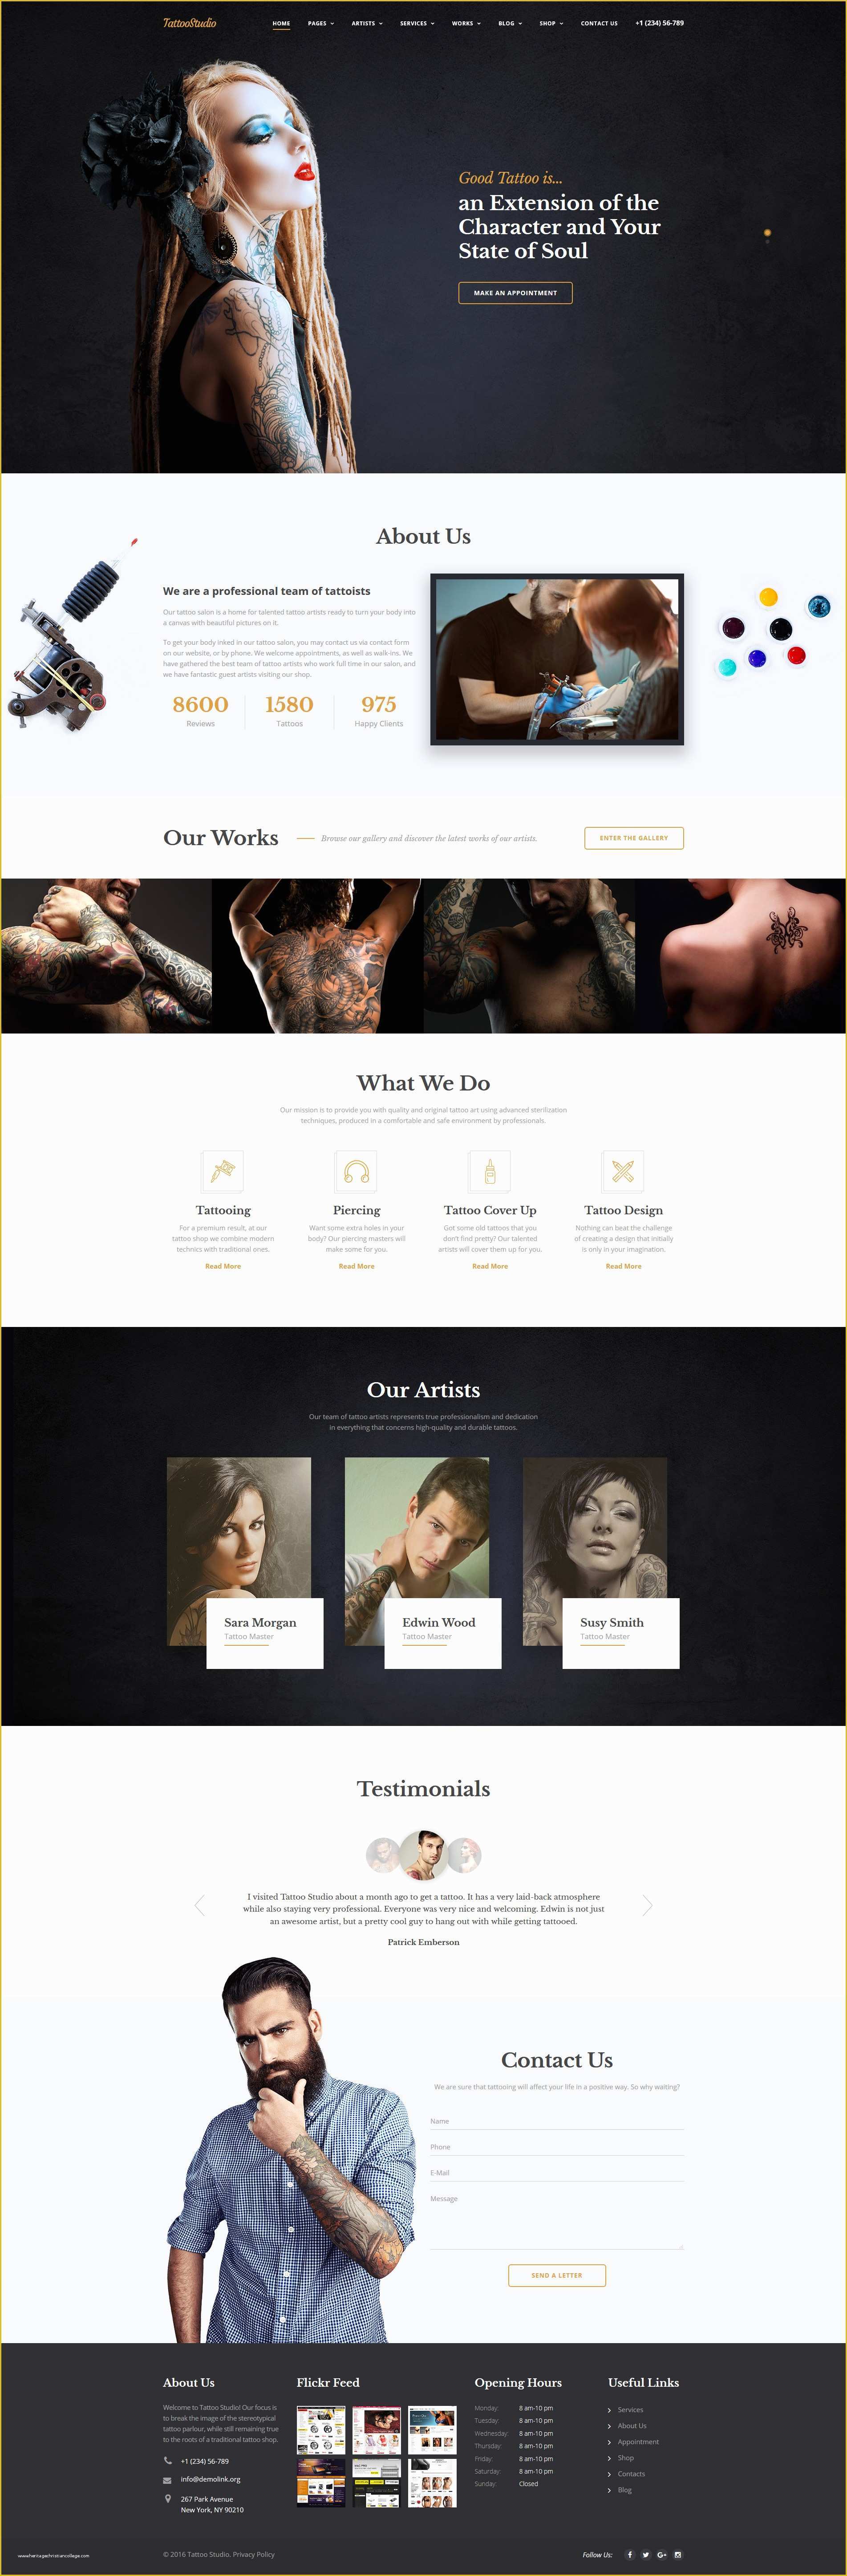 Beauty Spa Responsive Website Template Free Download Of Tattoo Salon Responsive Website Template